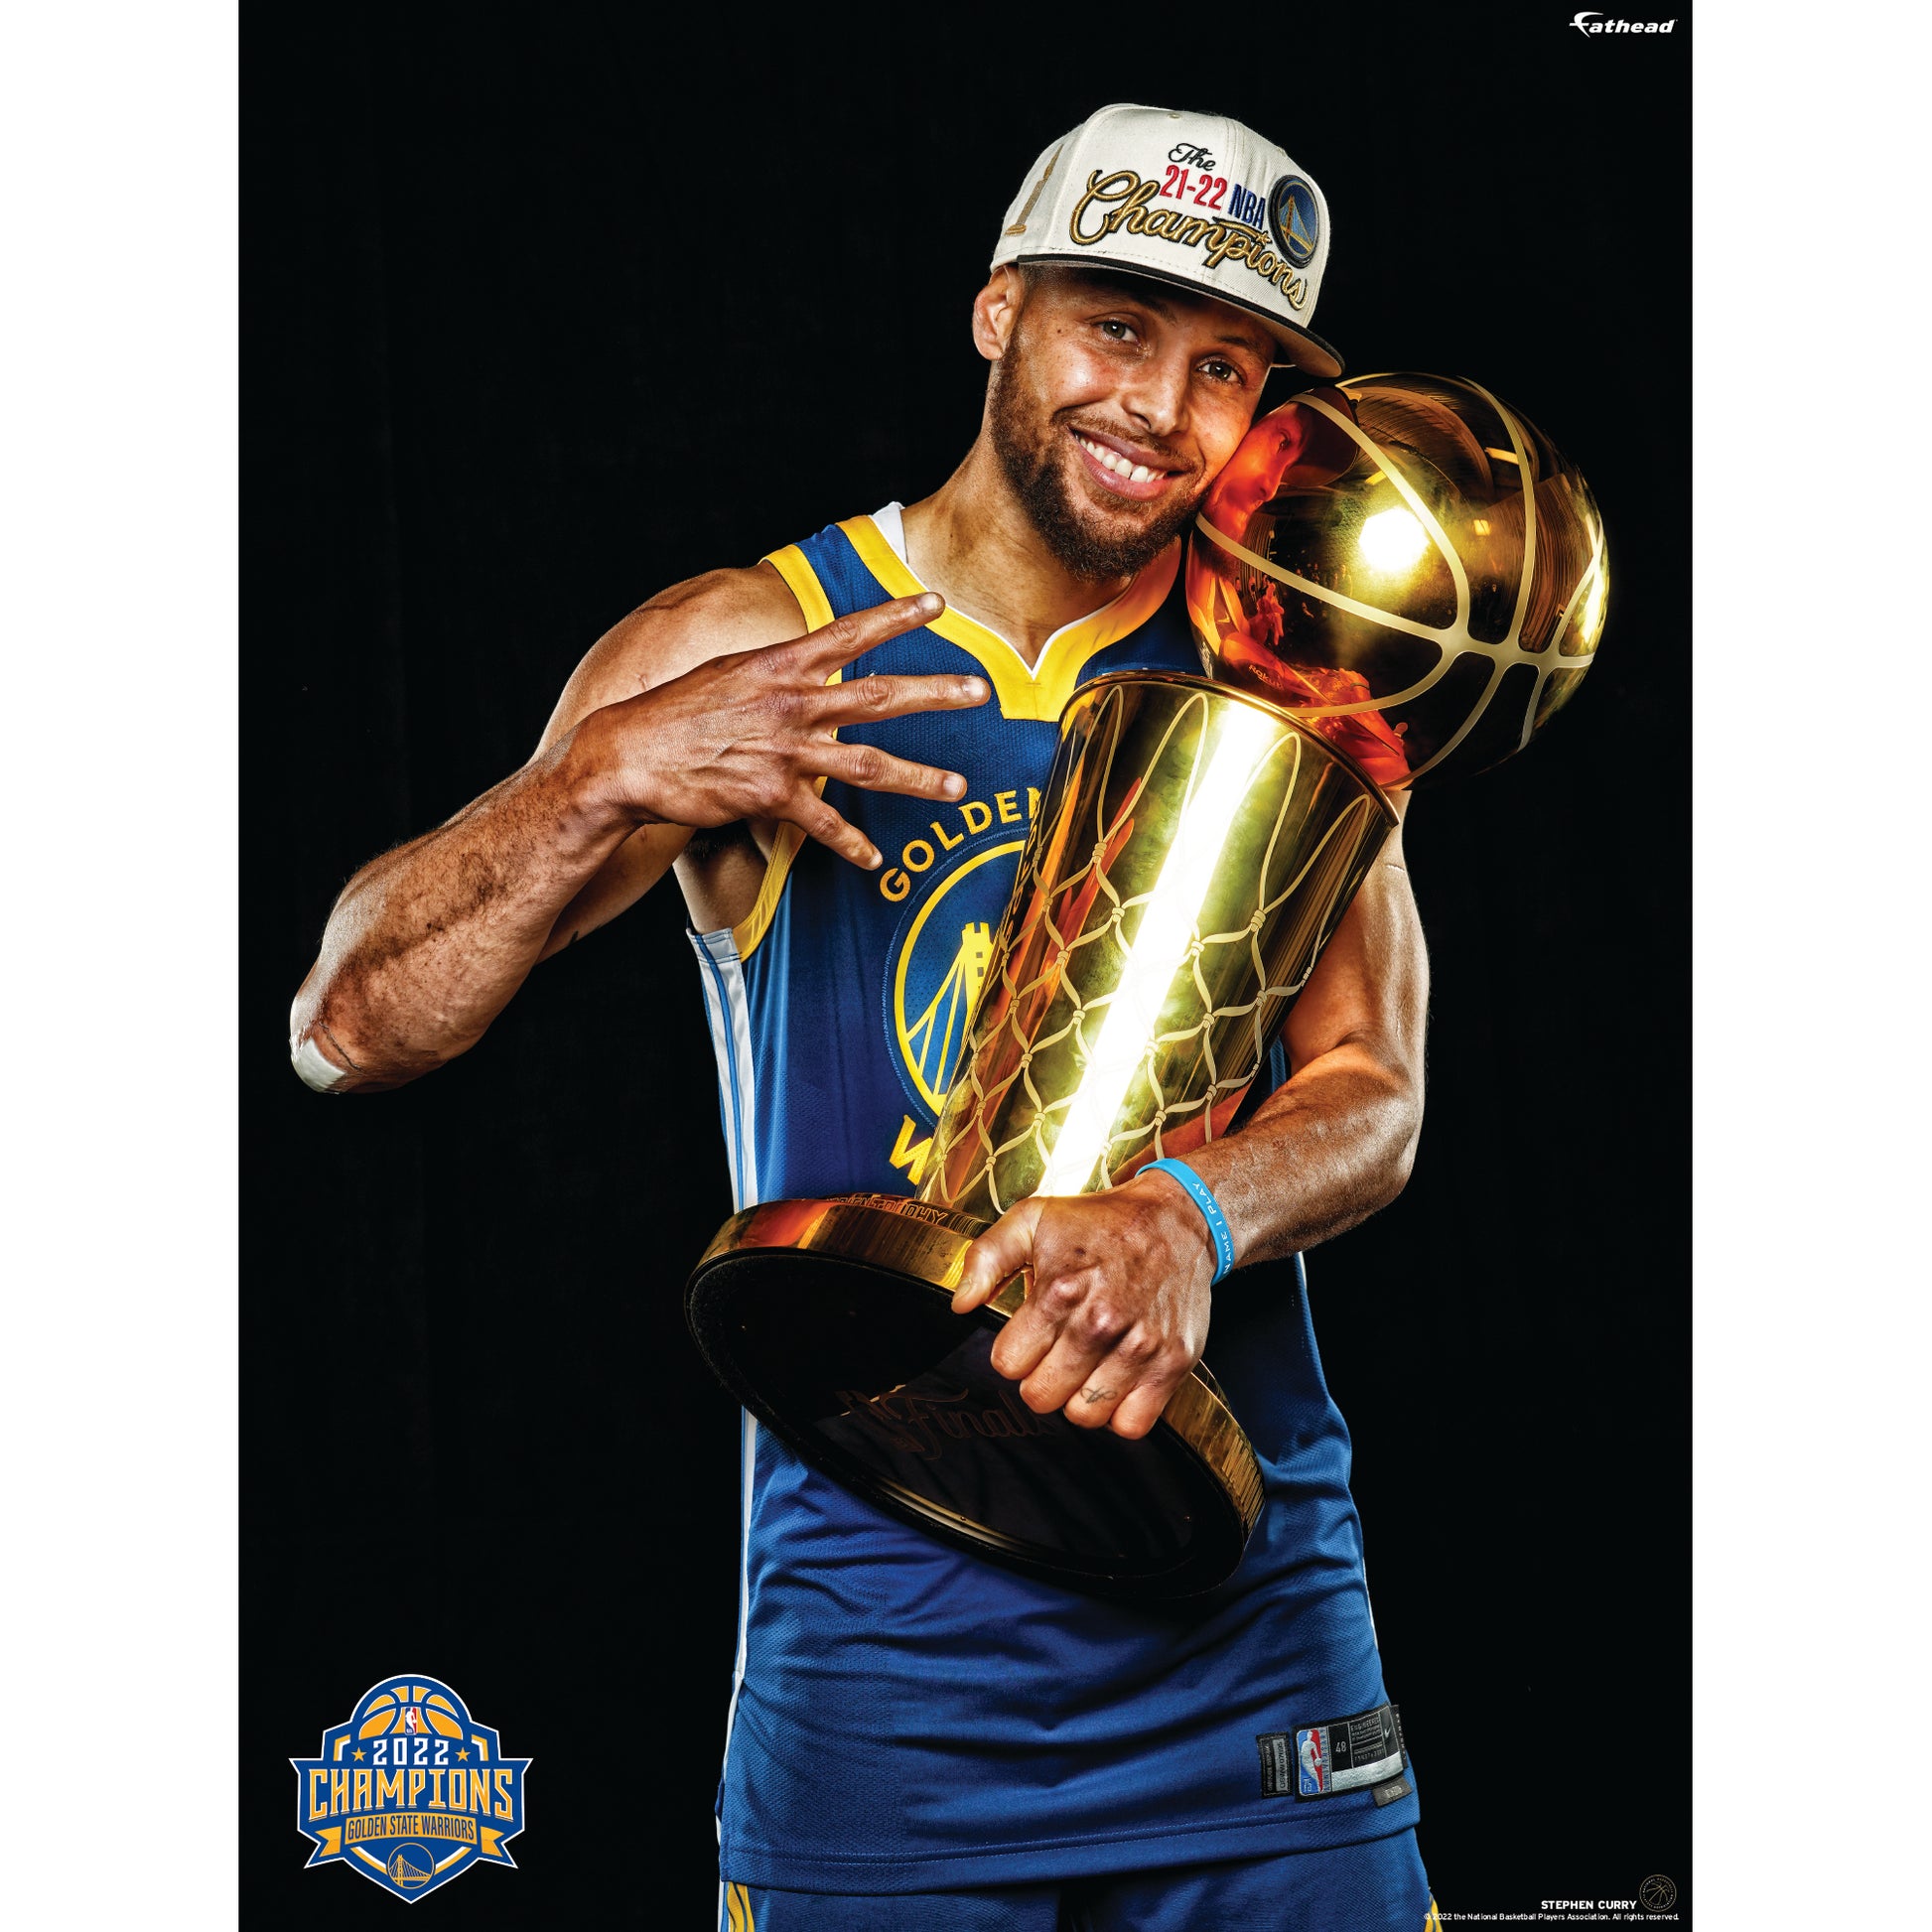 Warriors NBA Finals merchandise - Golden State Of Mind